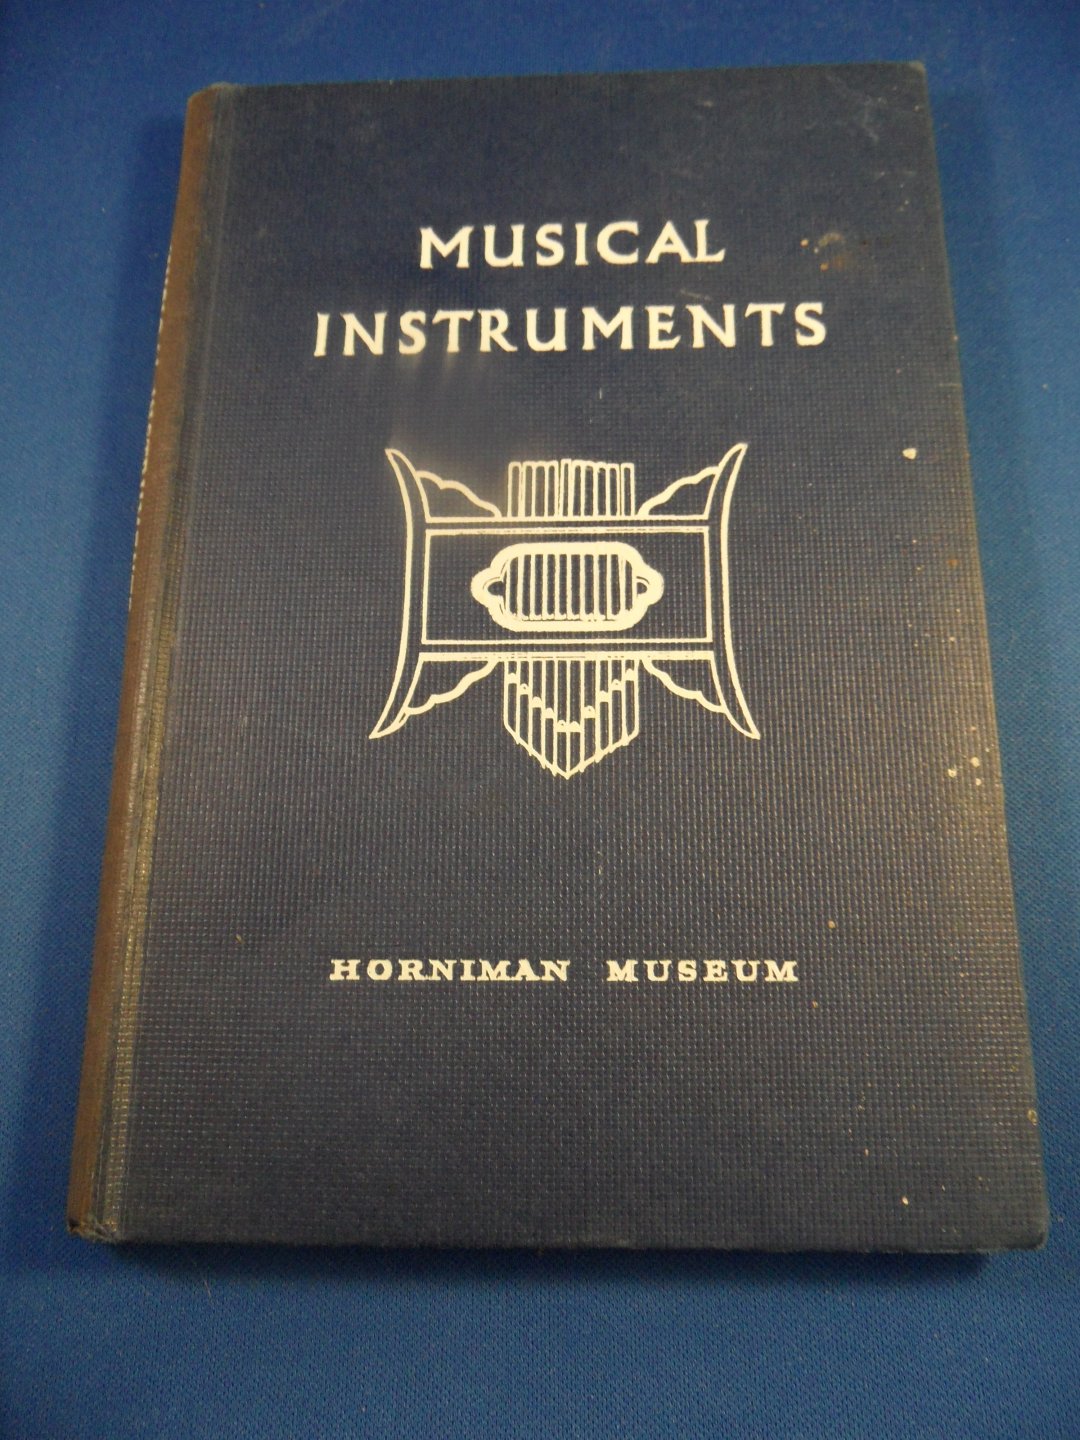 horniman museum - musical instruments